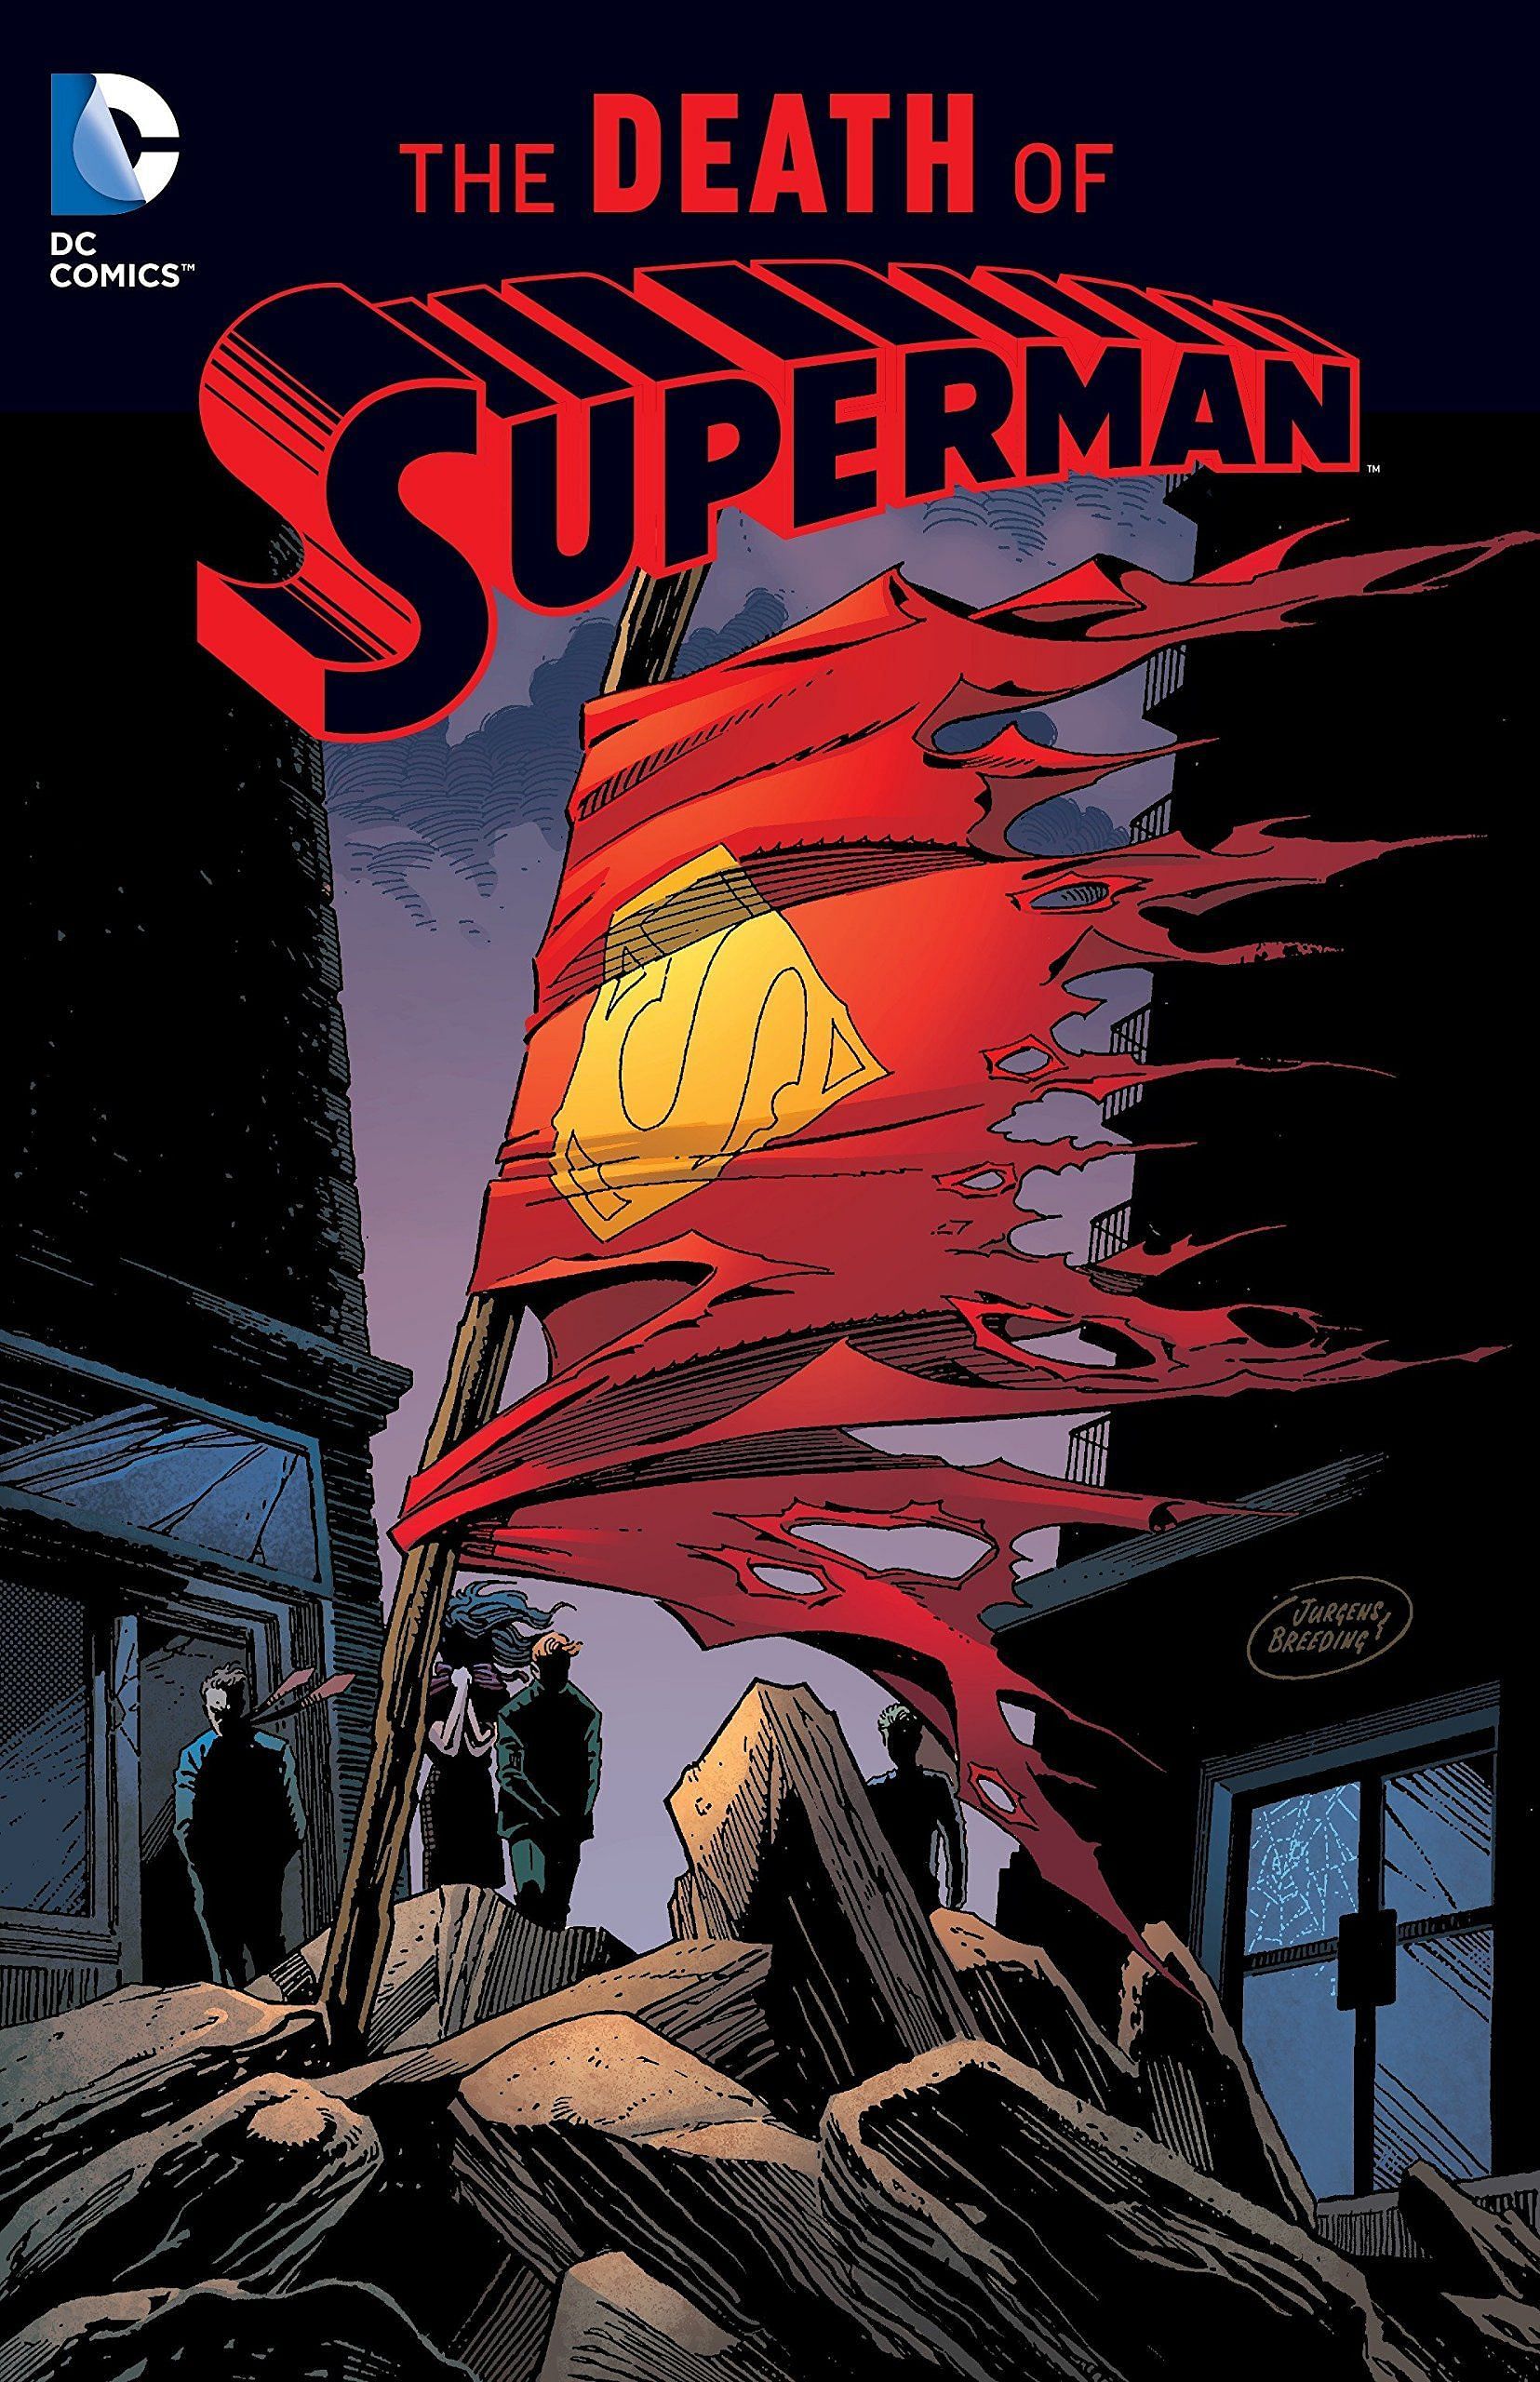 The Death of Superman comic issue (Image via DC Comics)